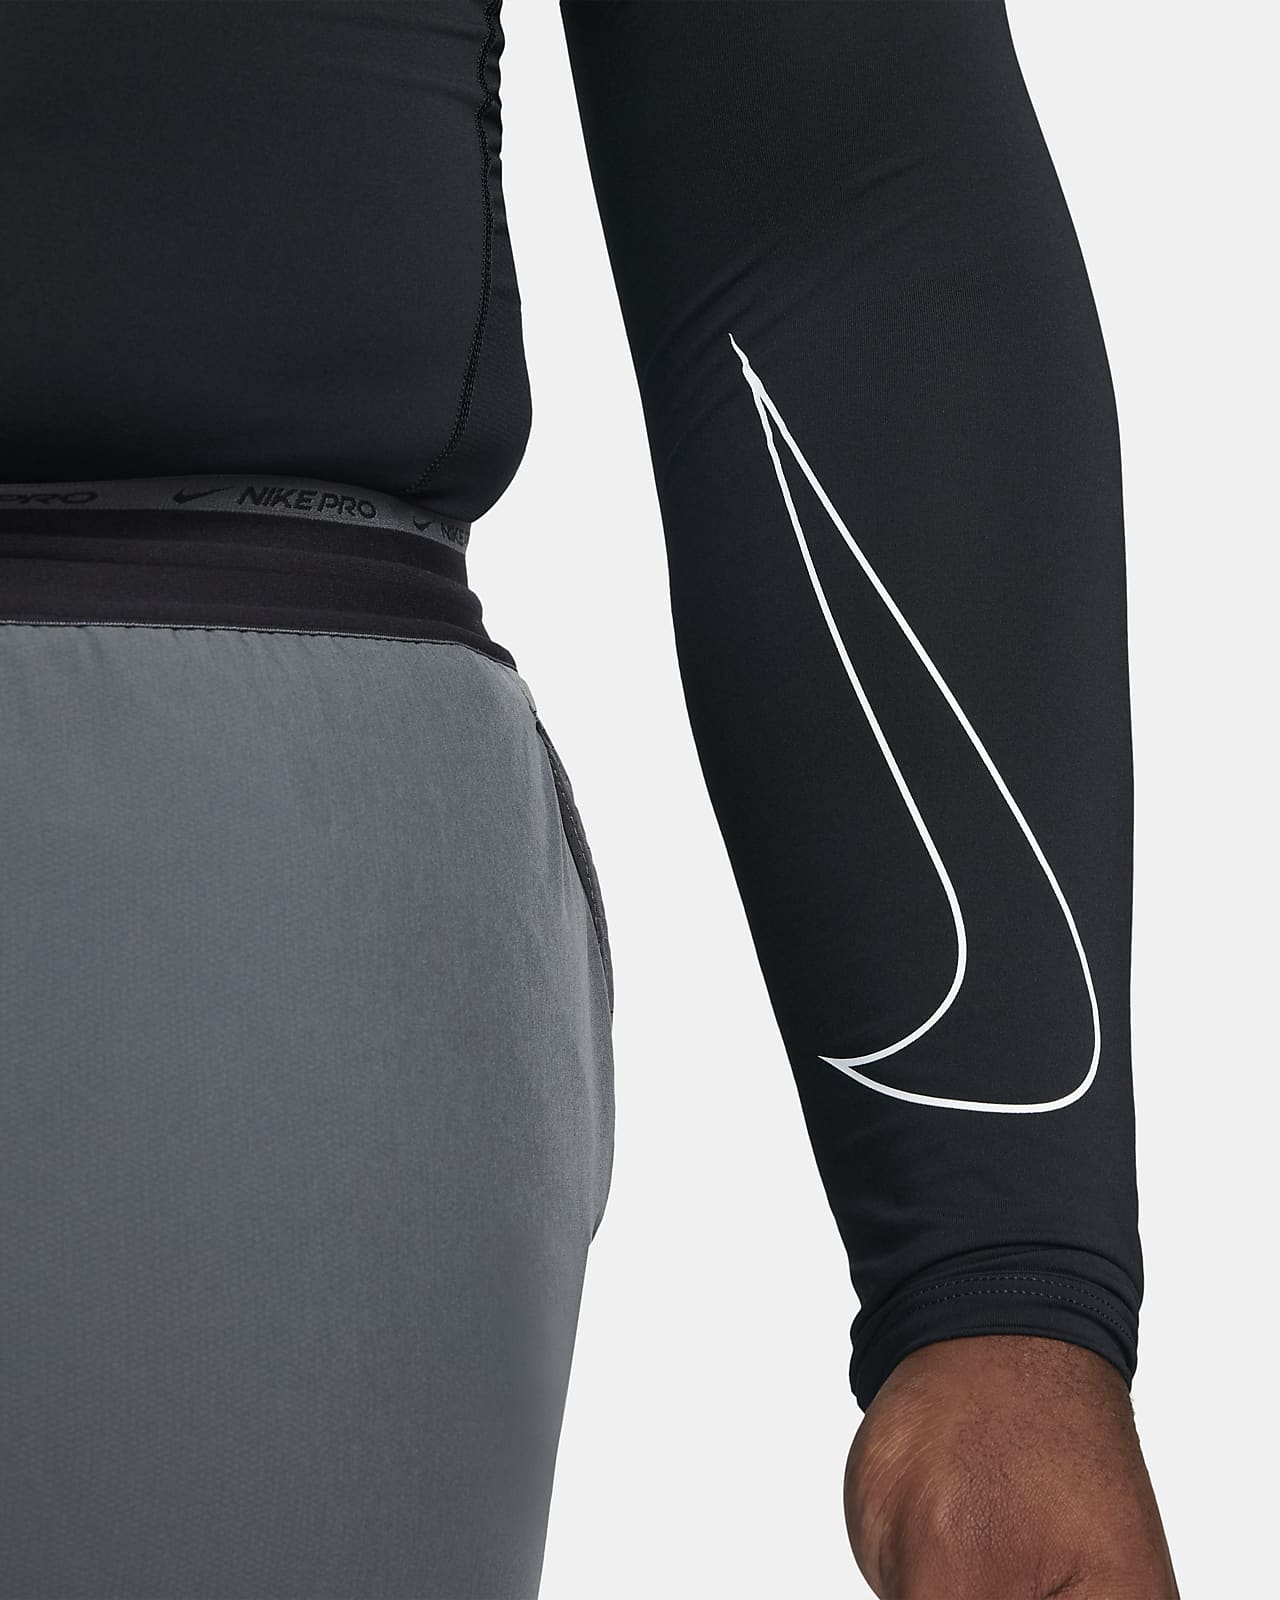 Resplandor Abrasivo gramática Nike Pro Dri-FIT Camiseta de manga larga y ajuste ceñido - Hombre. Nike ES